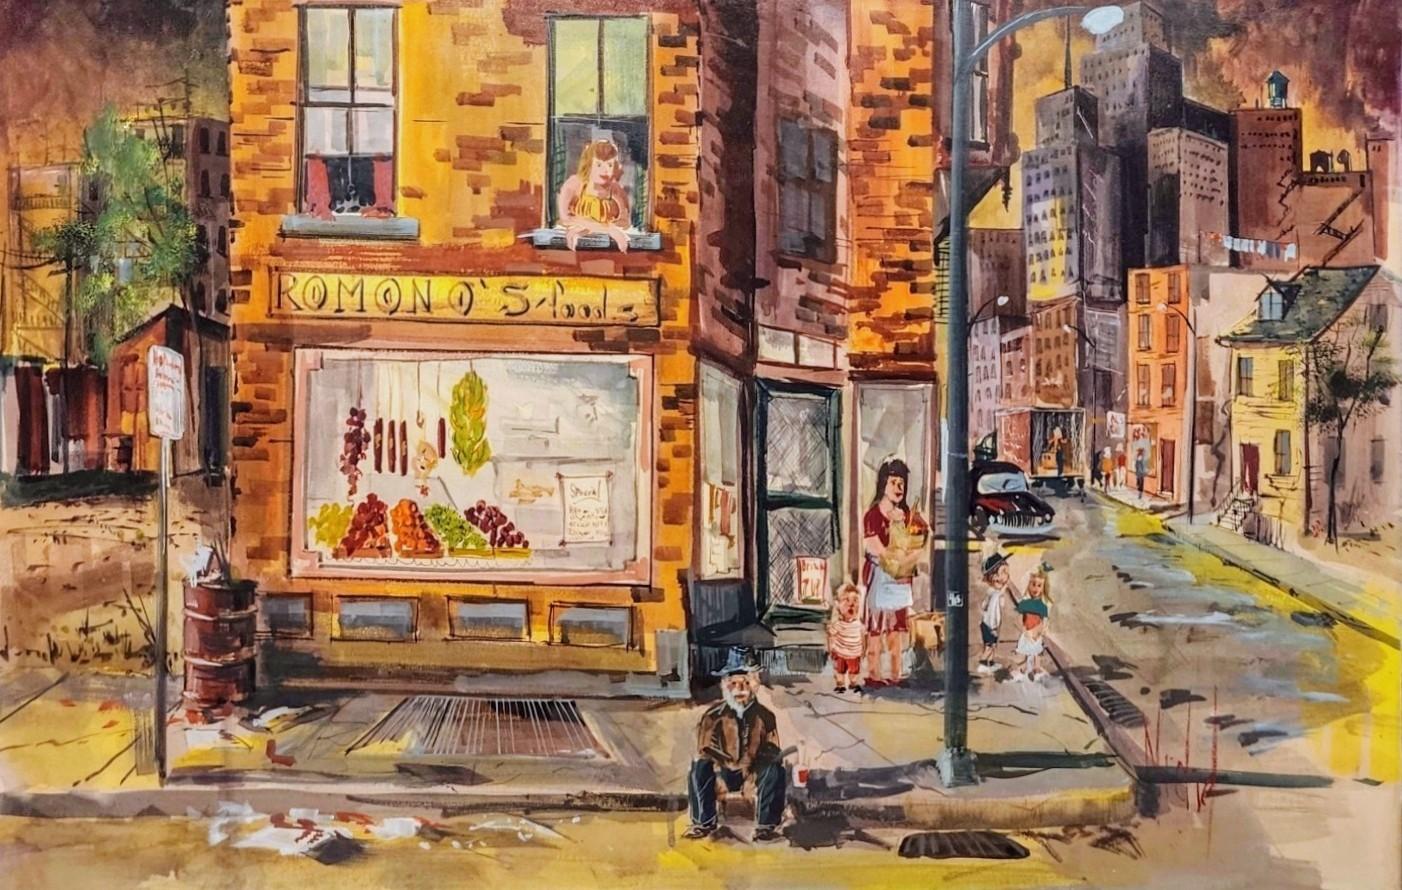 Ramono's Foods, Chicago Street Scene, Vintage-Szene, 1960er Jahre Stadtszene – Painting von Margaret Michel